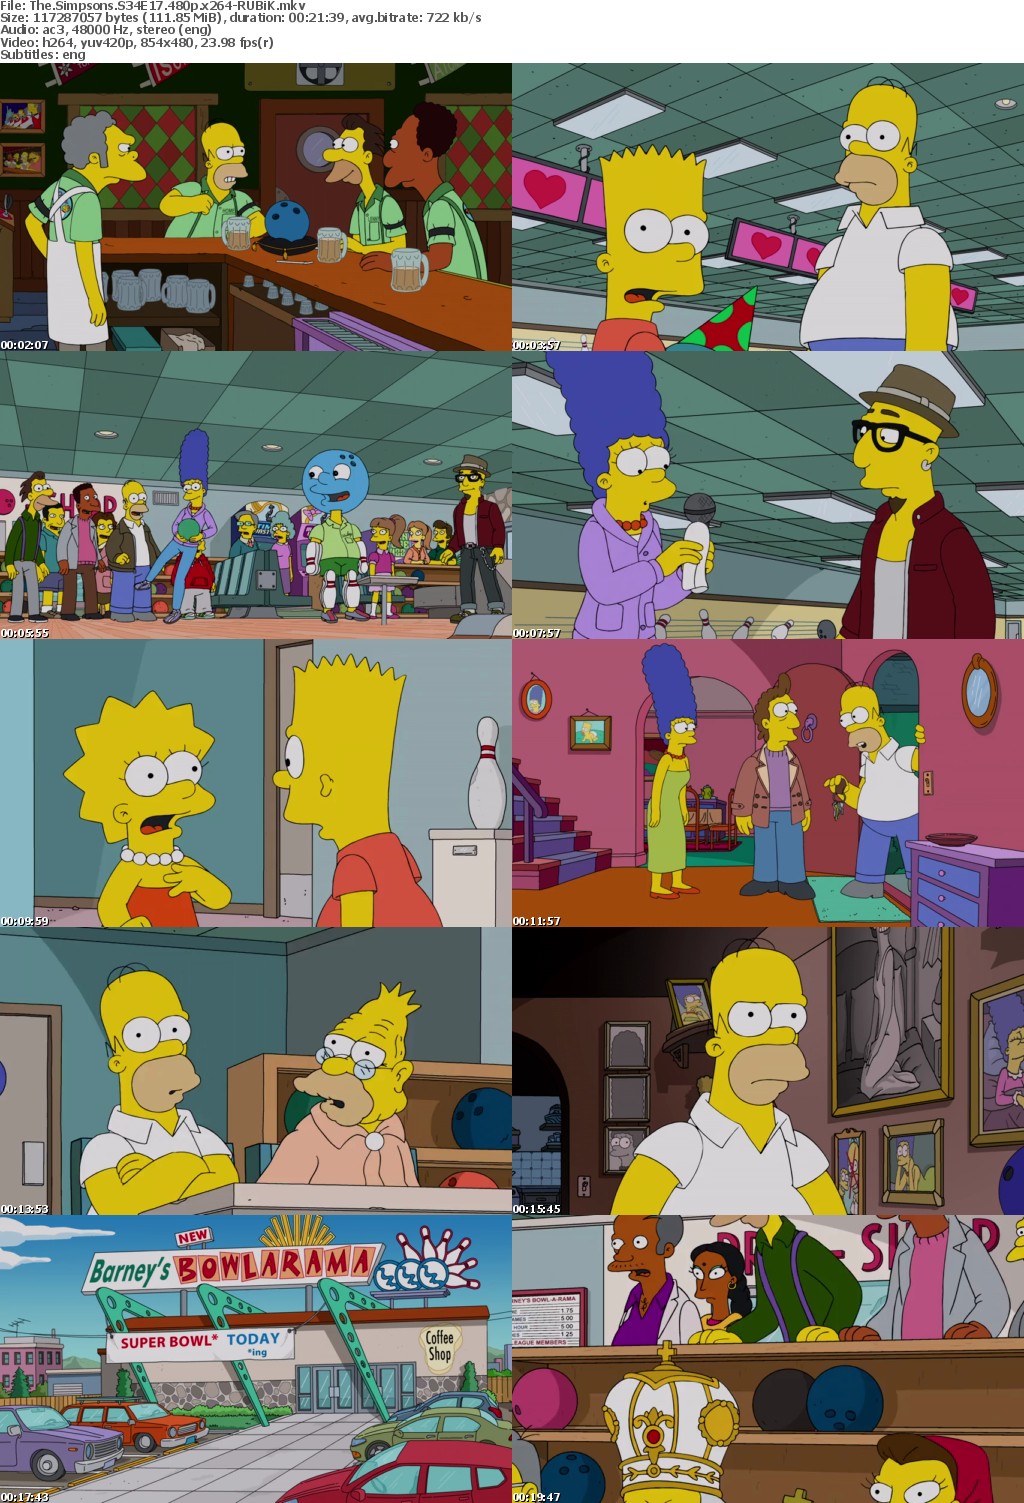 The Simpsons S34E17 480p x264-RUBiK